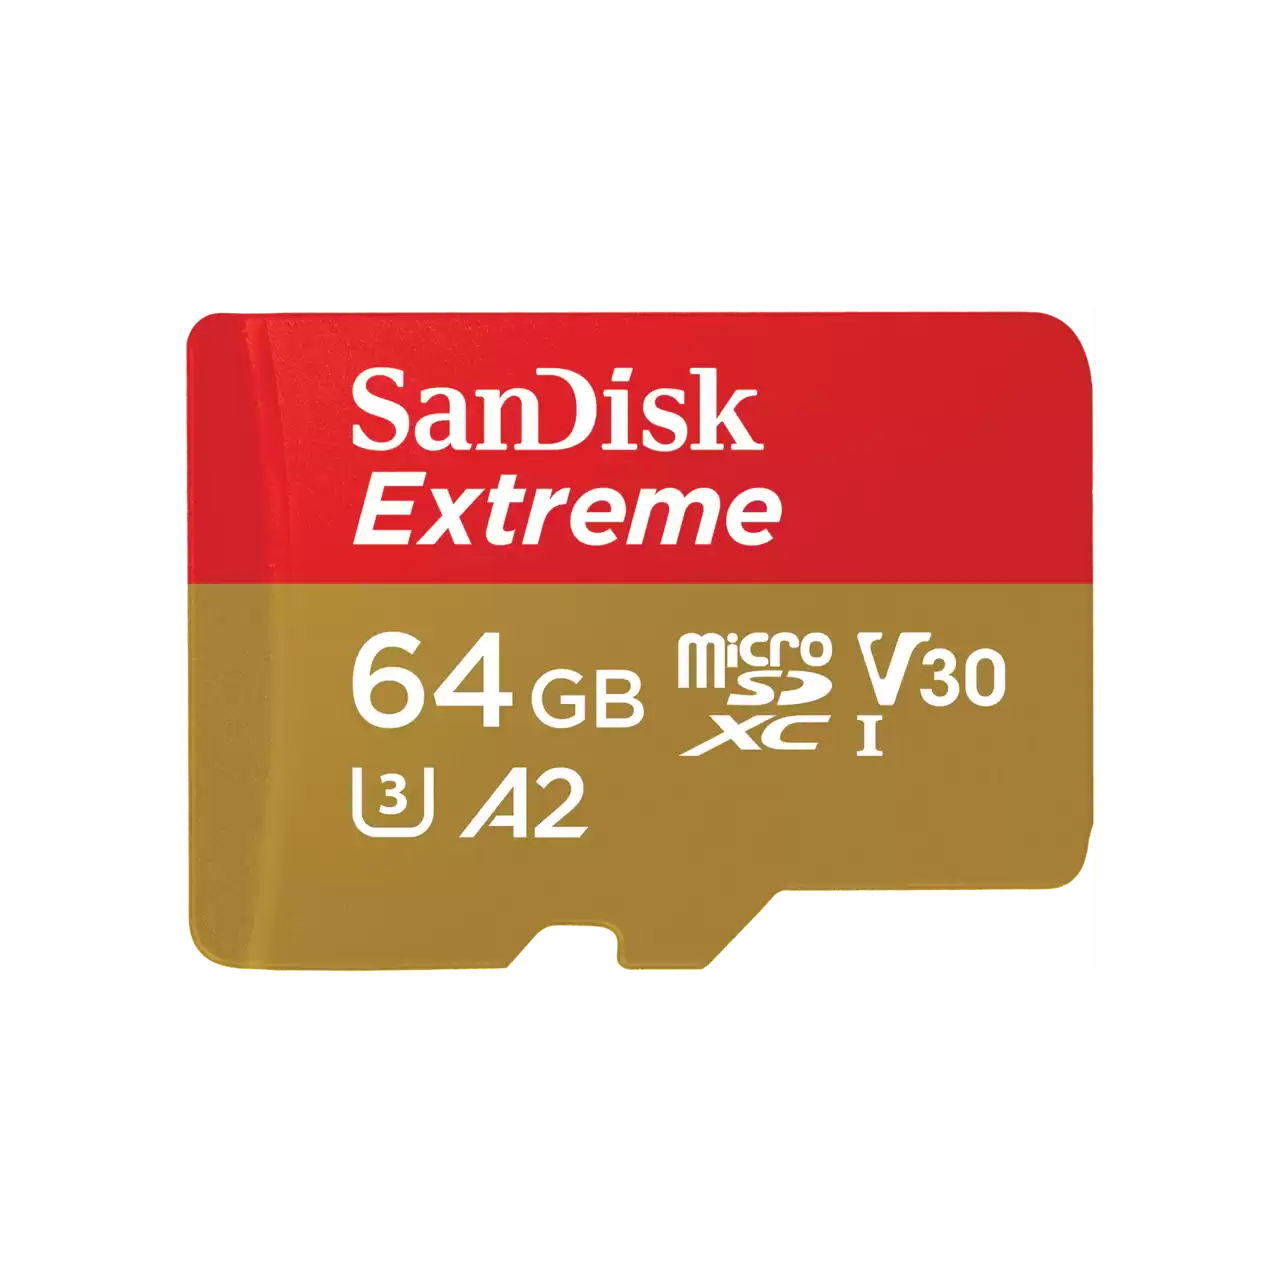 Sandisk Extreme SD UHS-I Card 170 MBPS 64GB